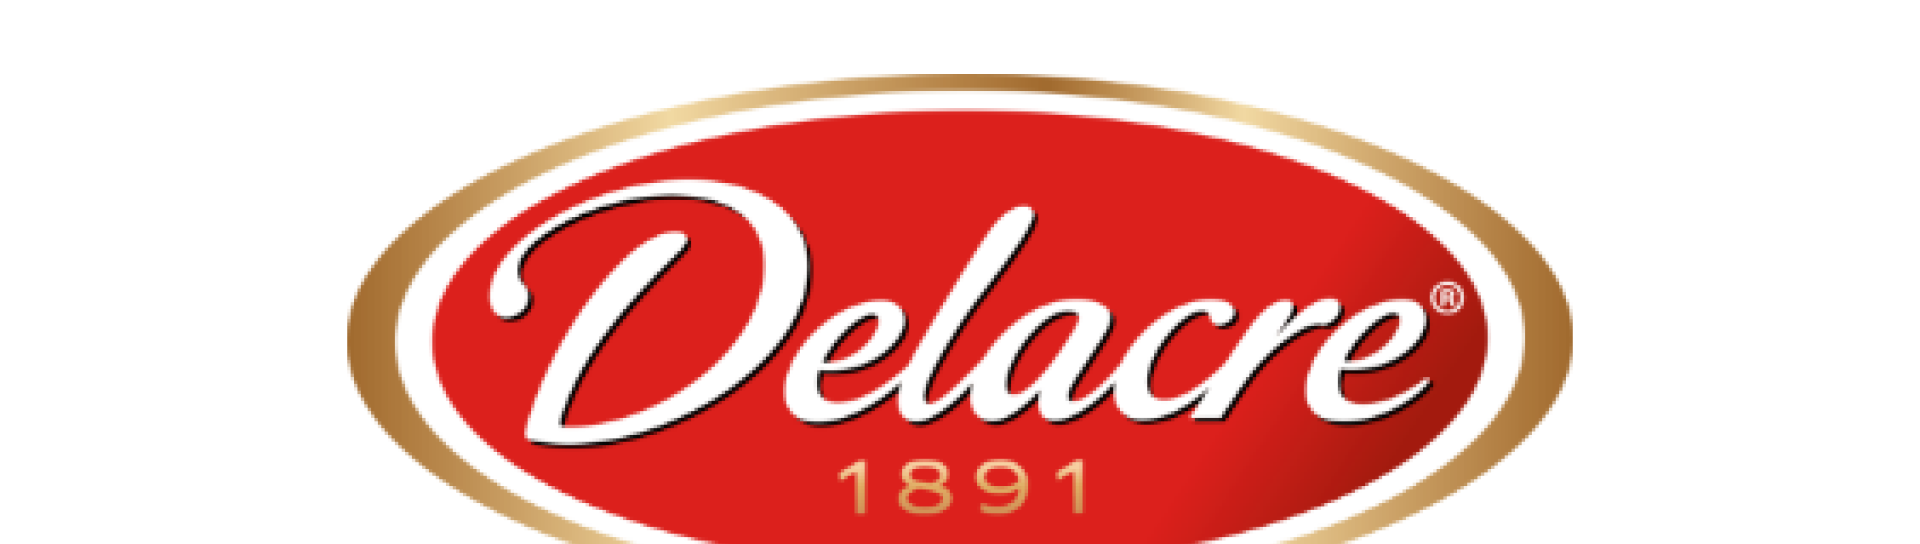 Delacre logo carousel